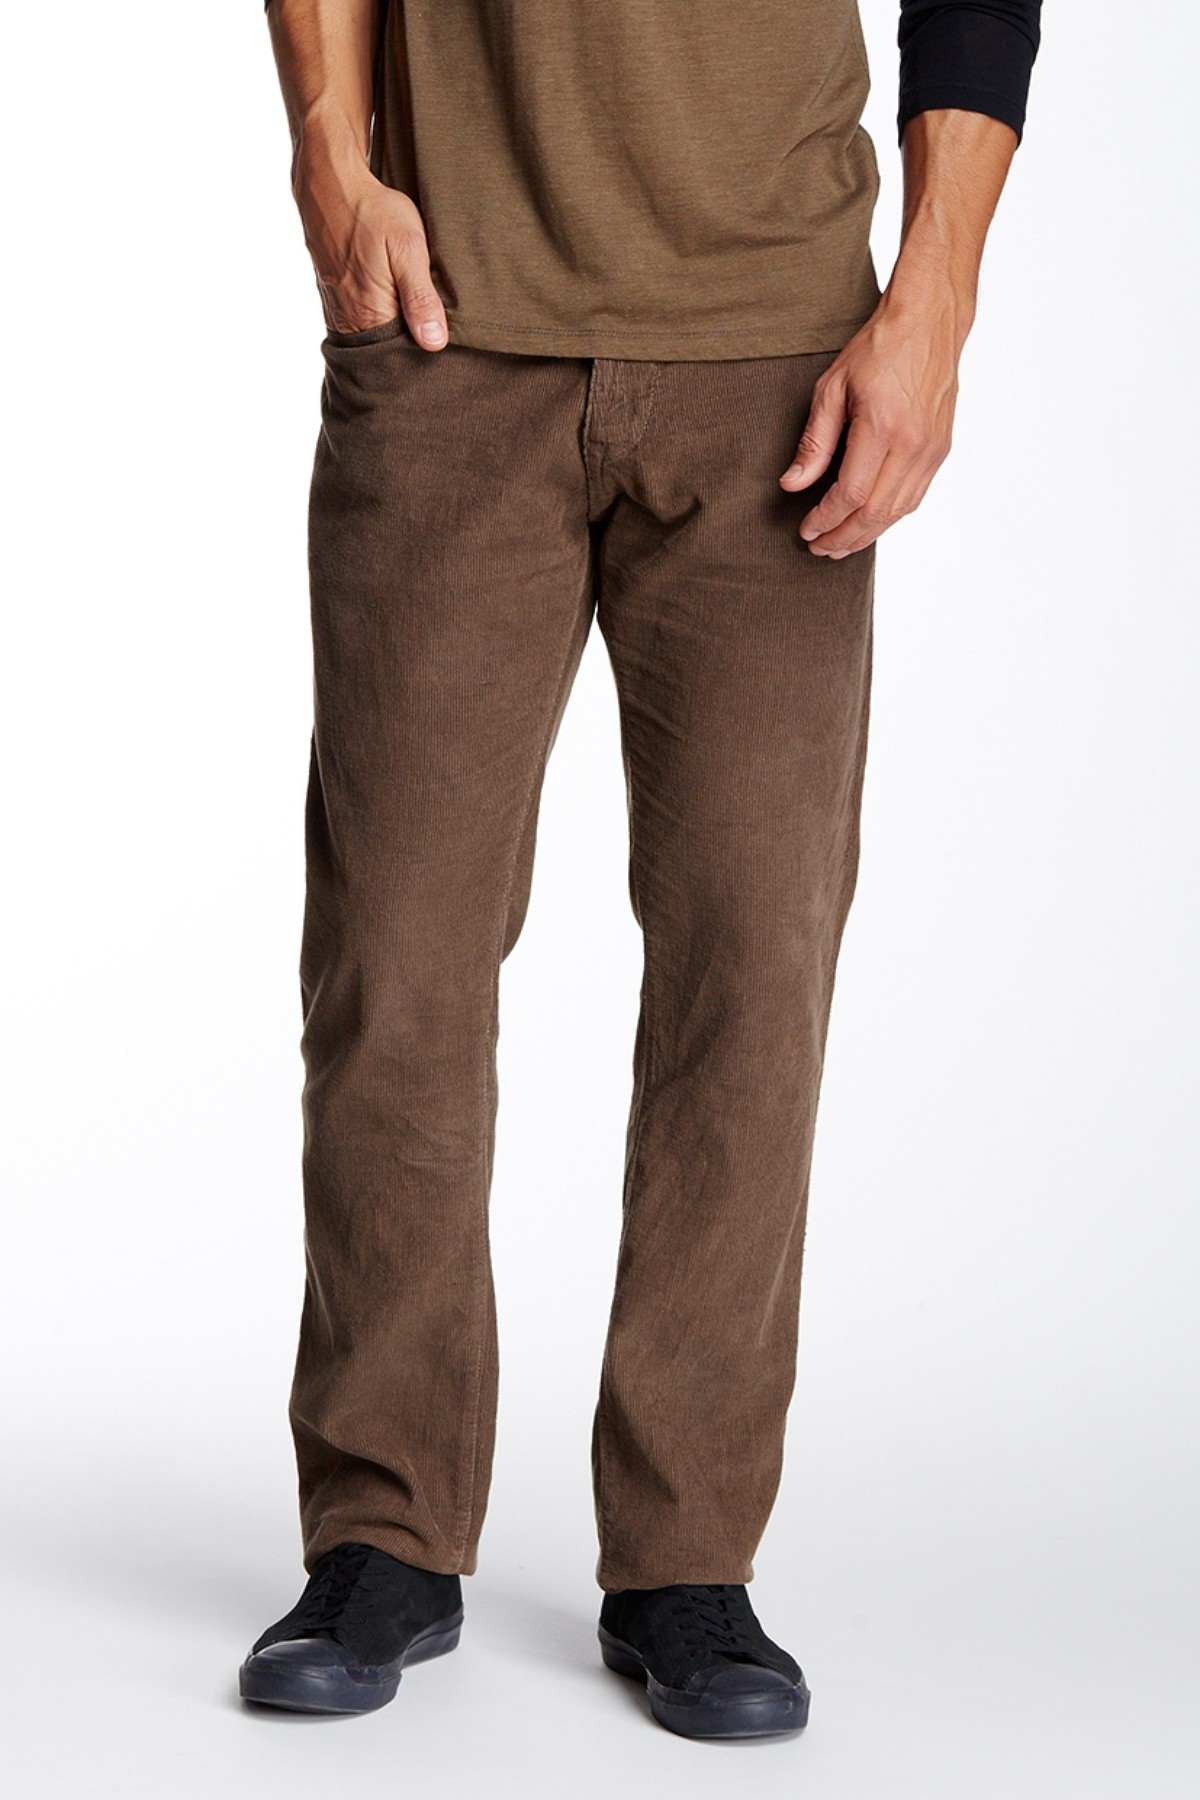 Lyst - Save Khaki Corduroy Pant in Brown for Men